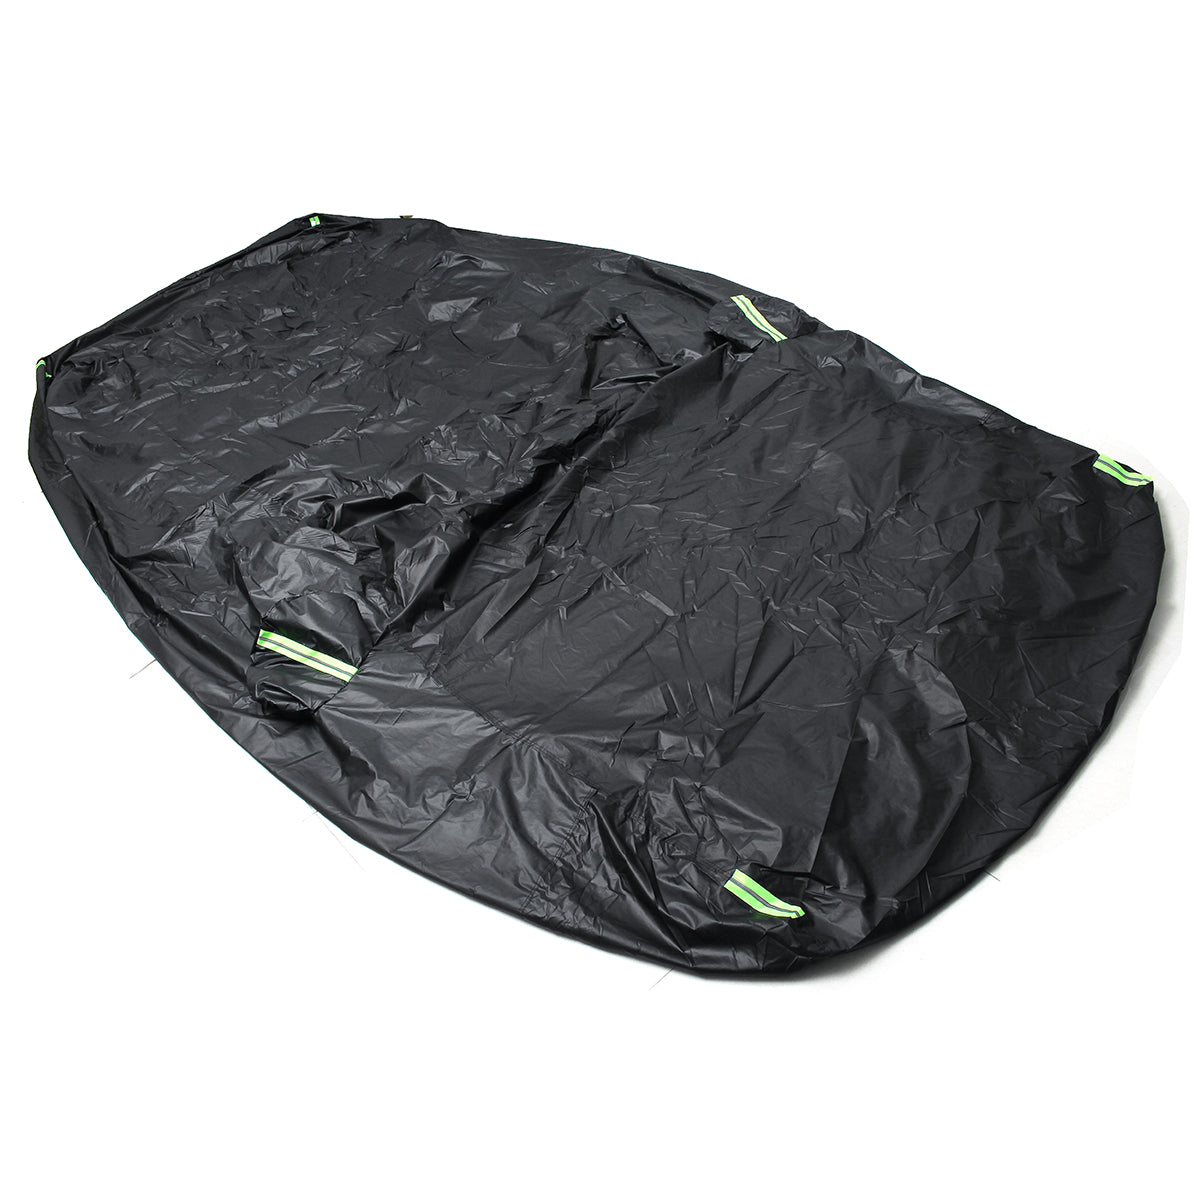 Dark Slate Gray Universal Full Car Cover Waterproof Breathable Rain Snow Protection For BMW Mini